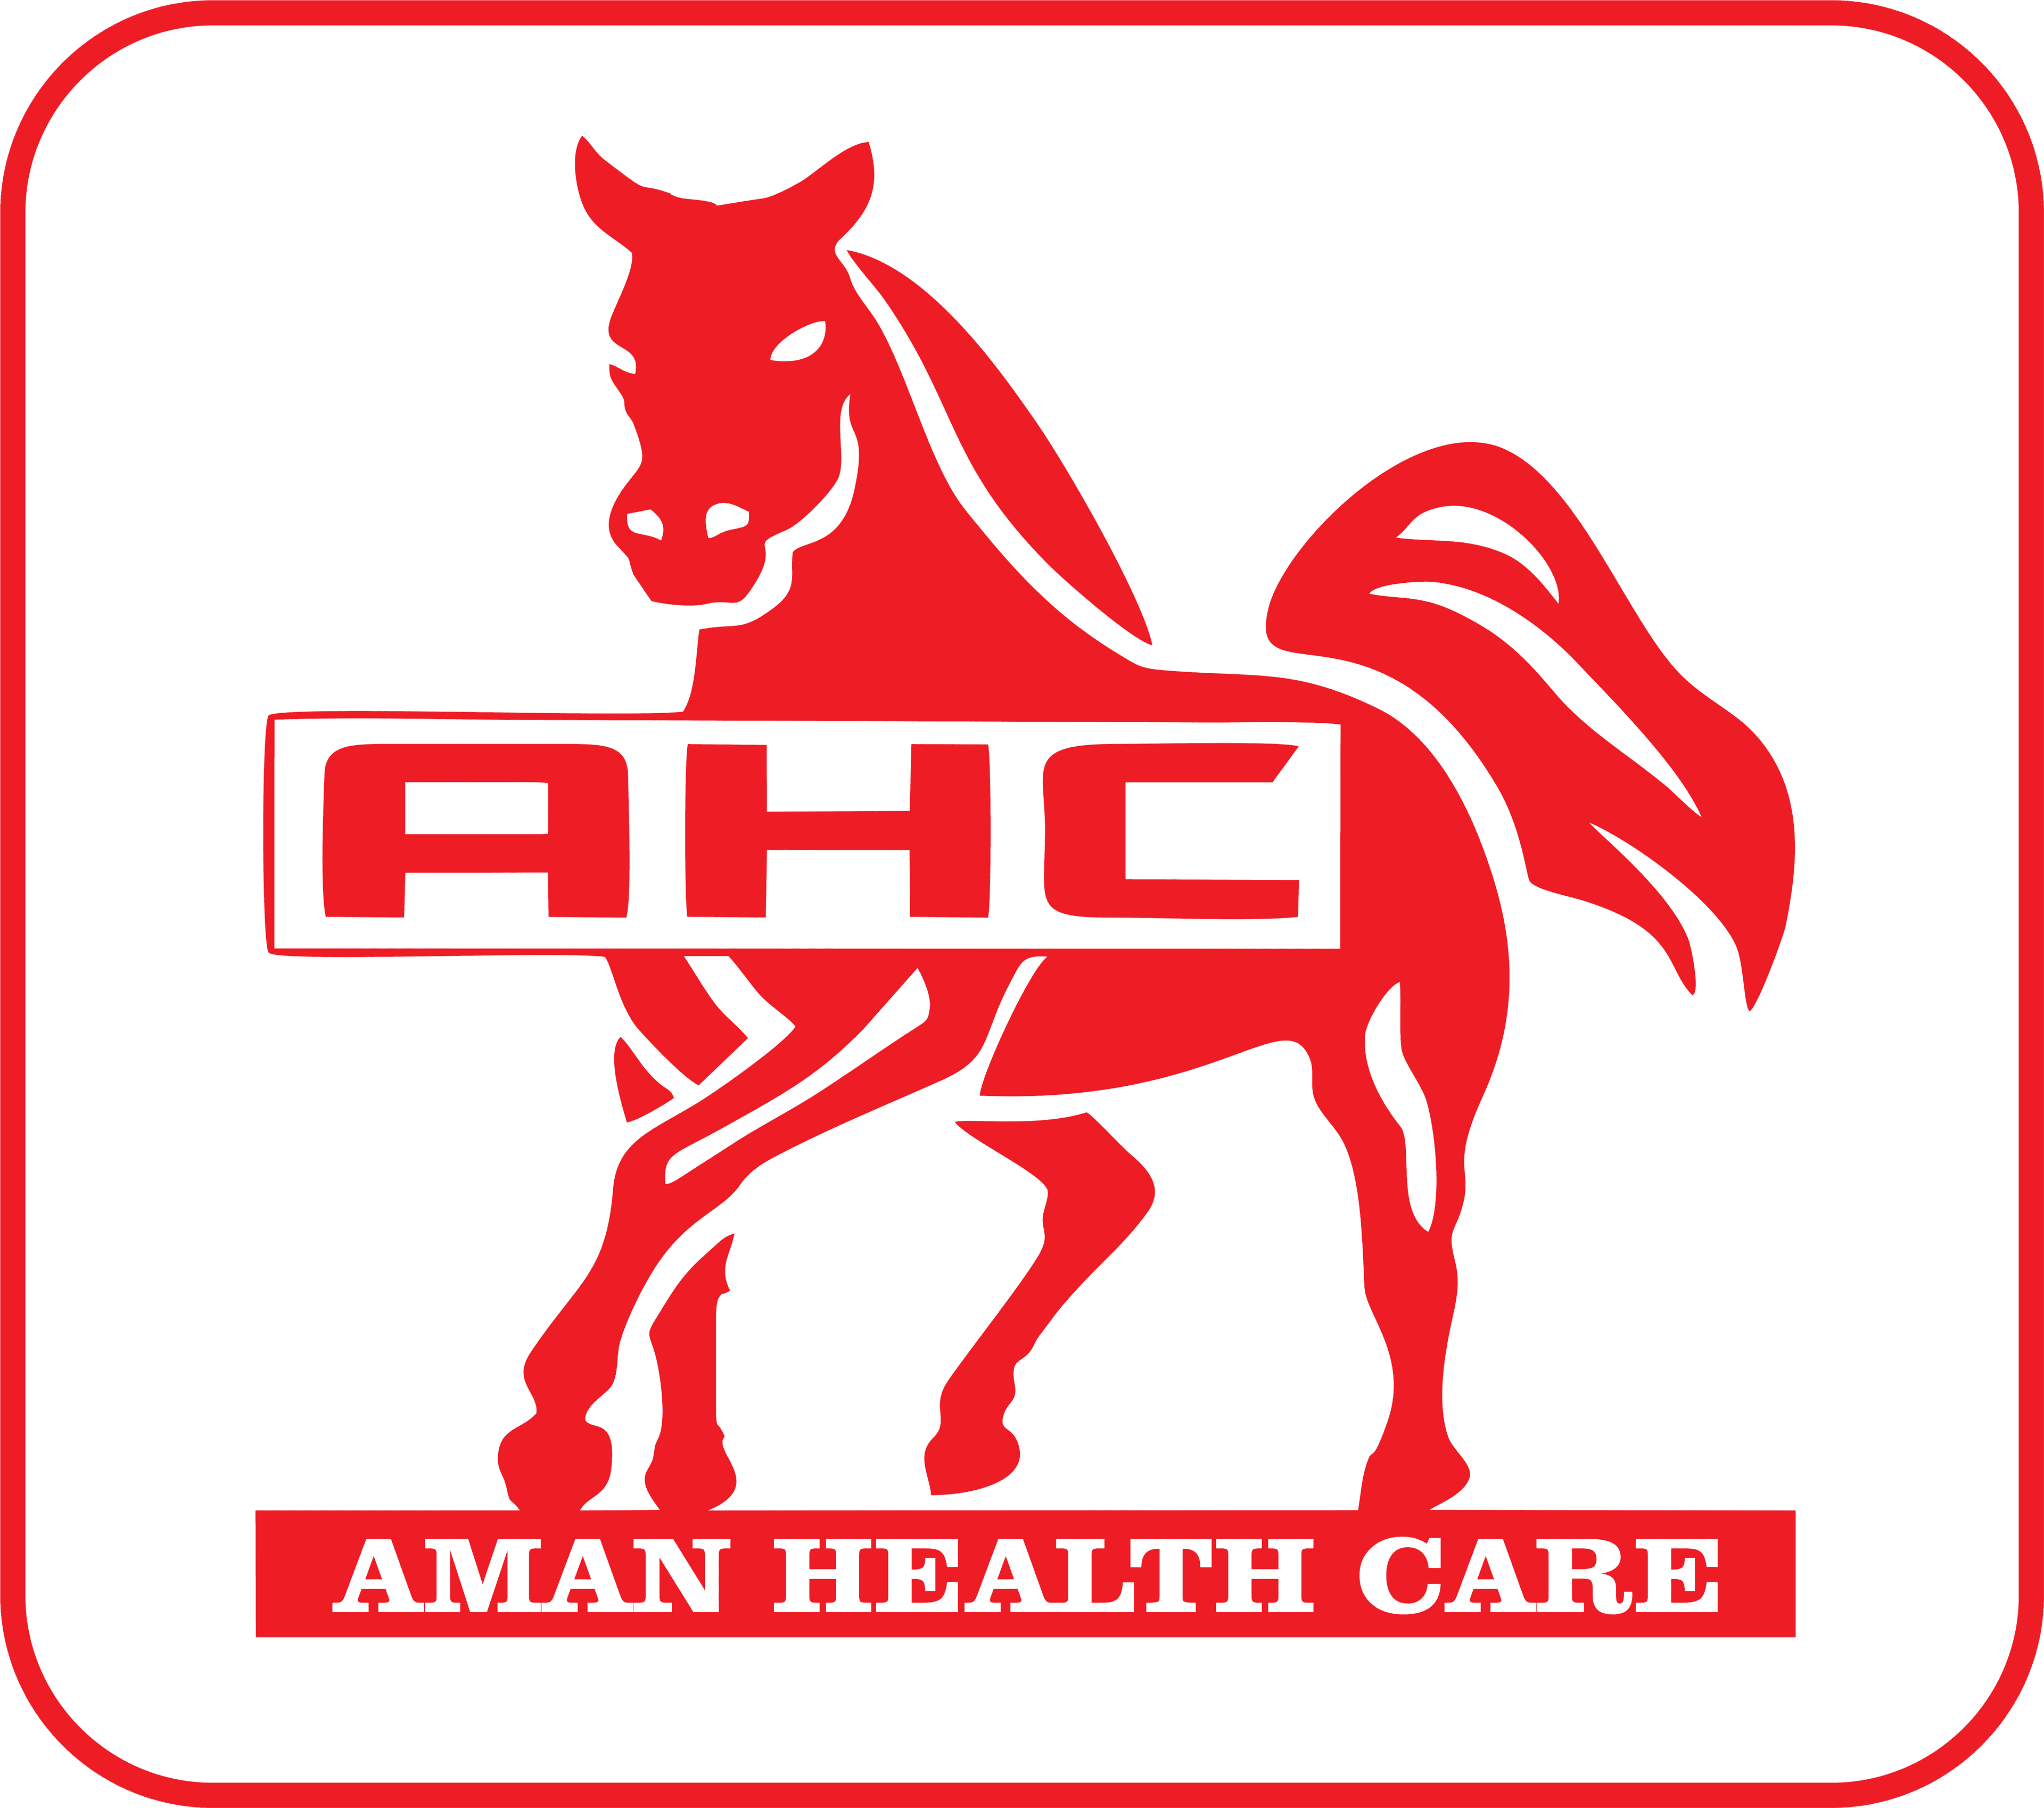 AMAN HEALTH CARE